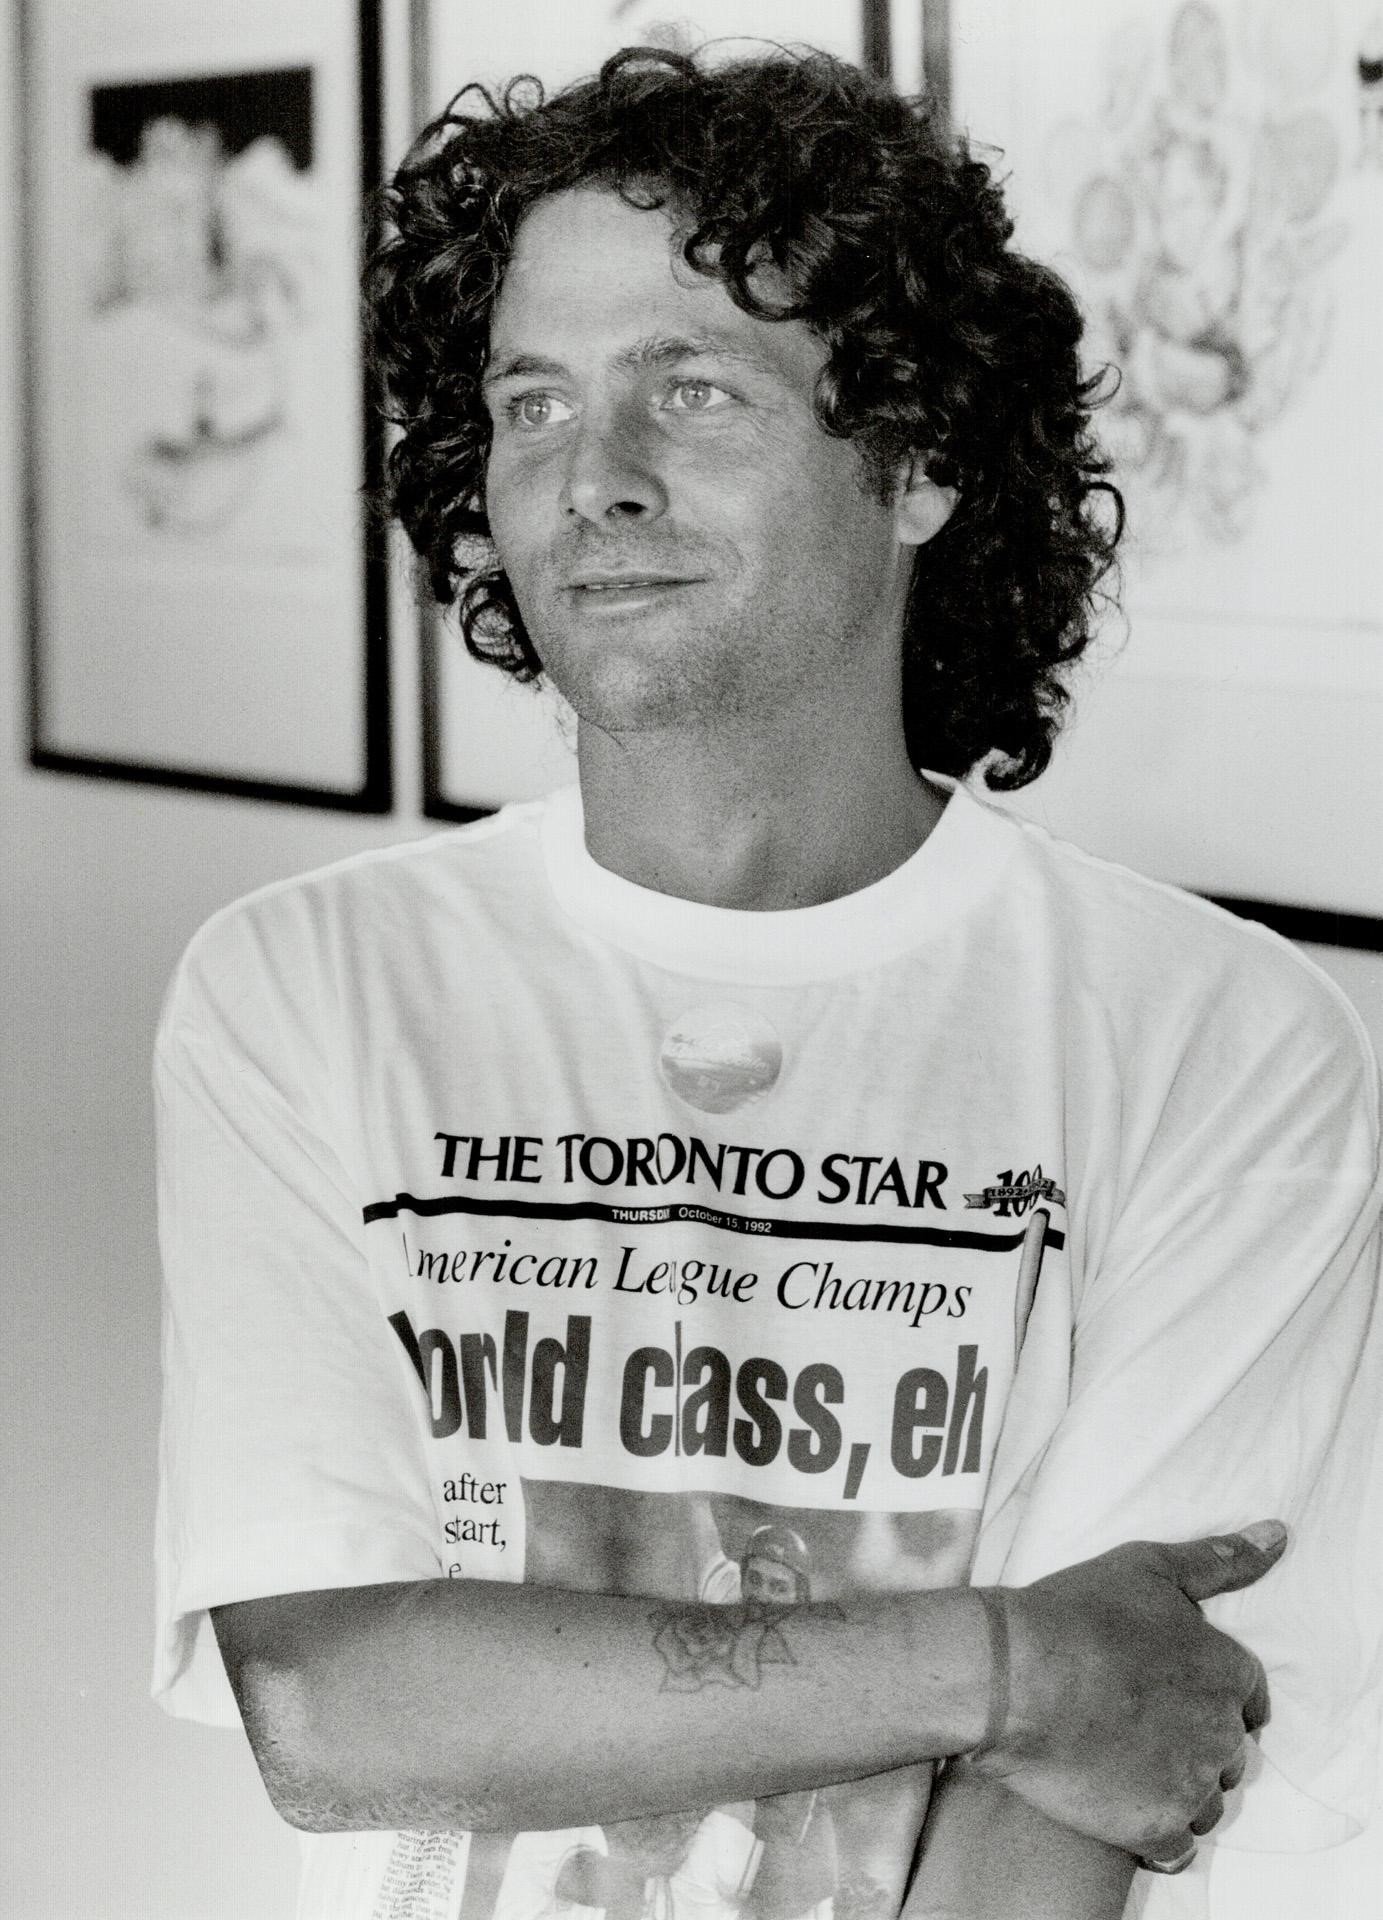 David with Toronto Star T Shirt.jpg